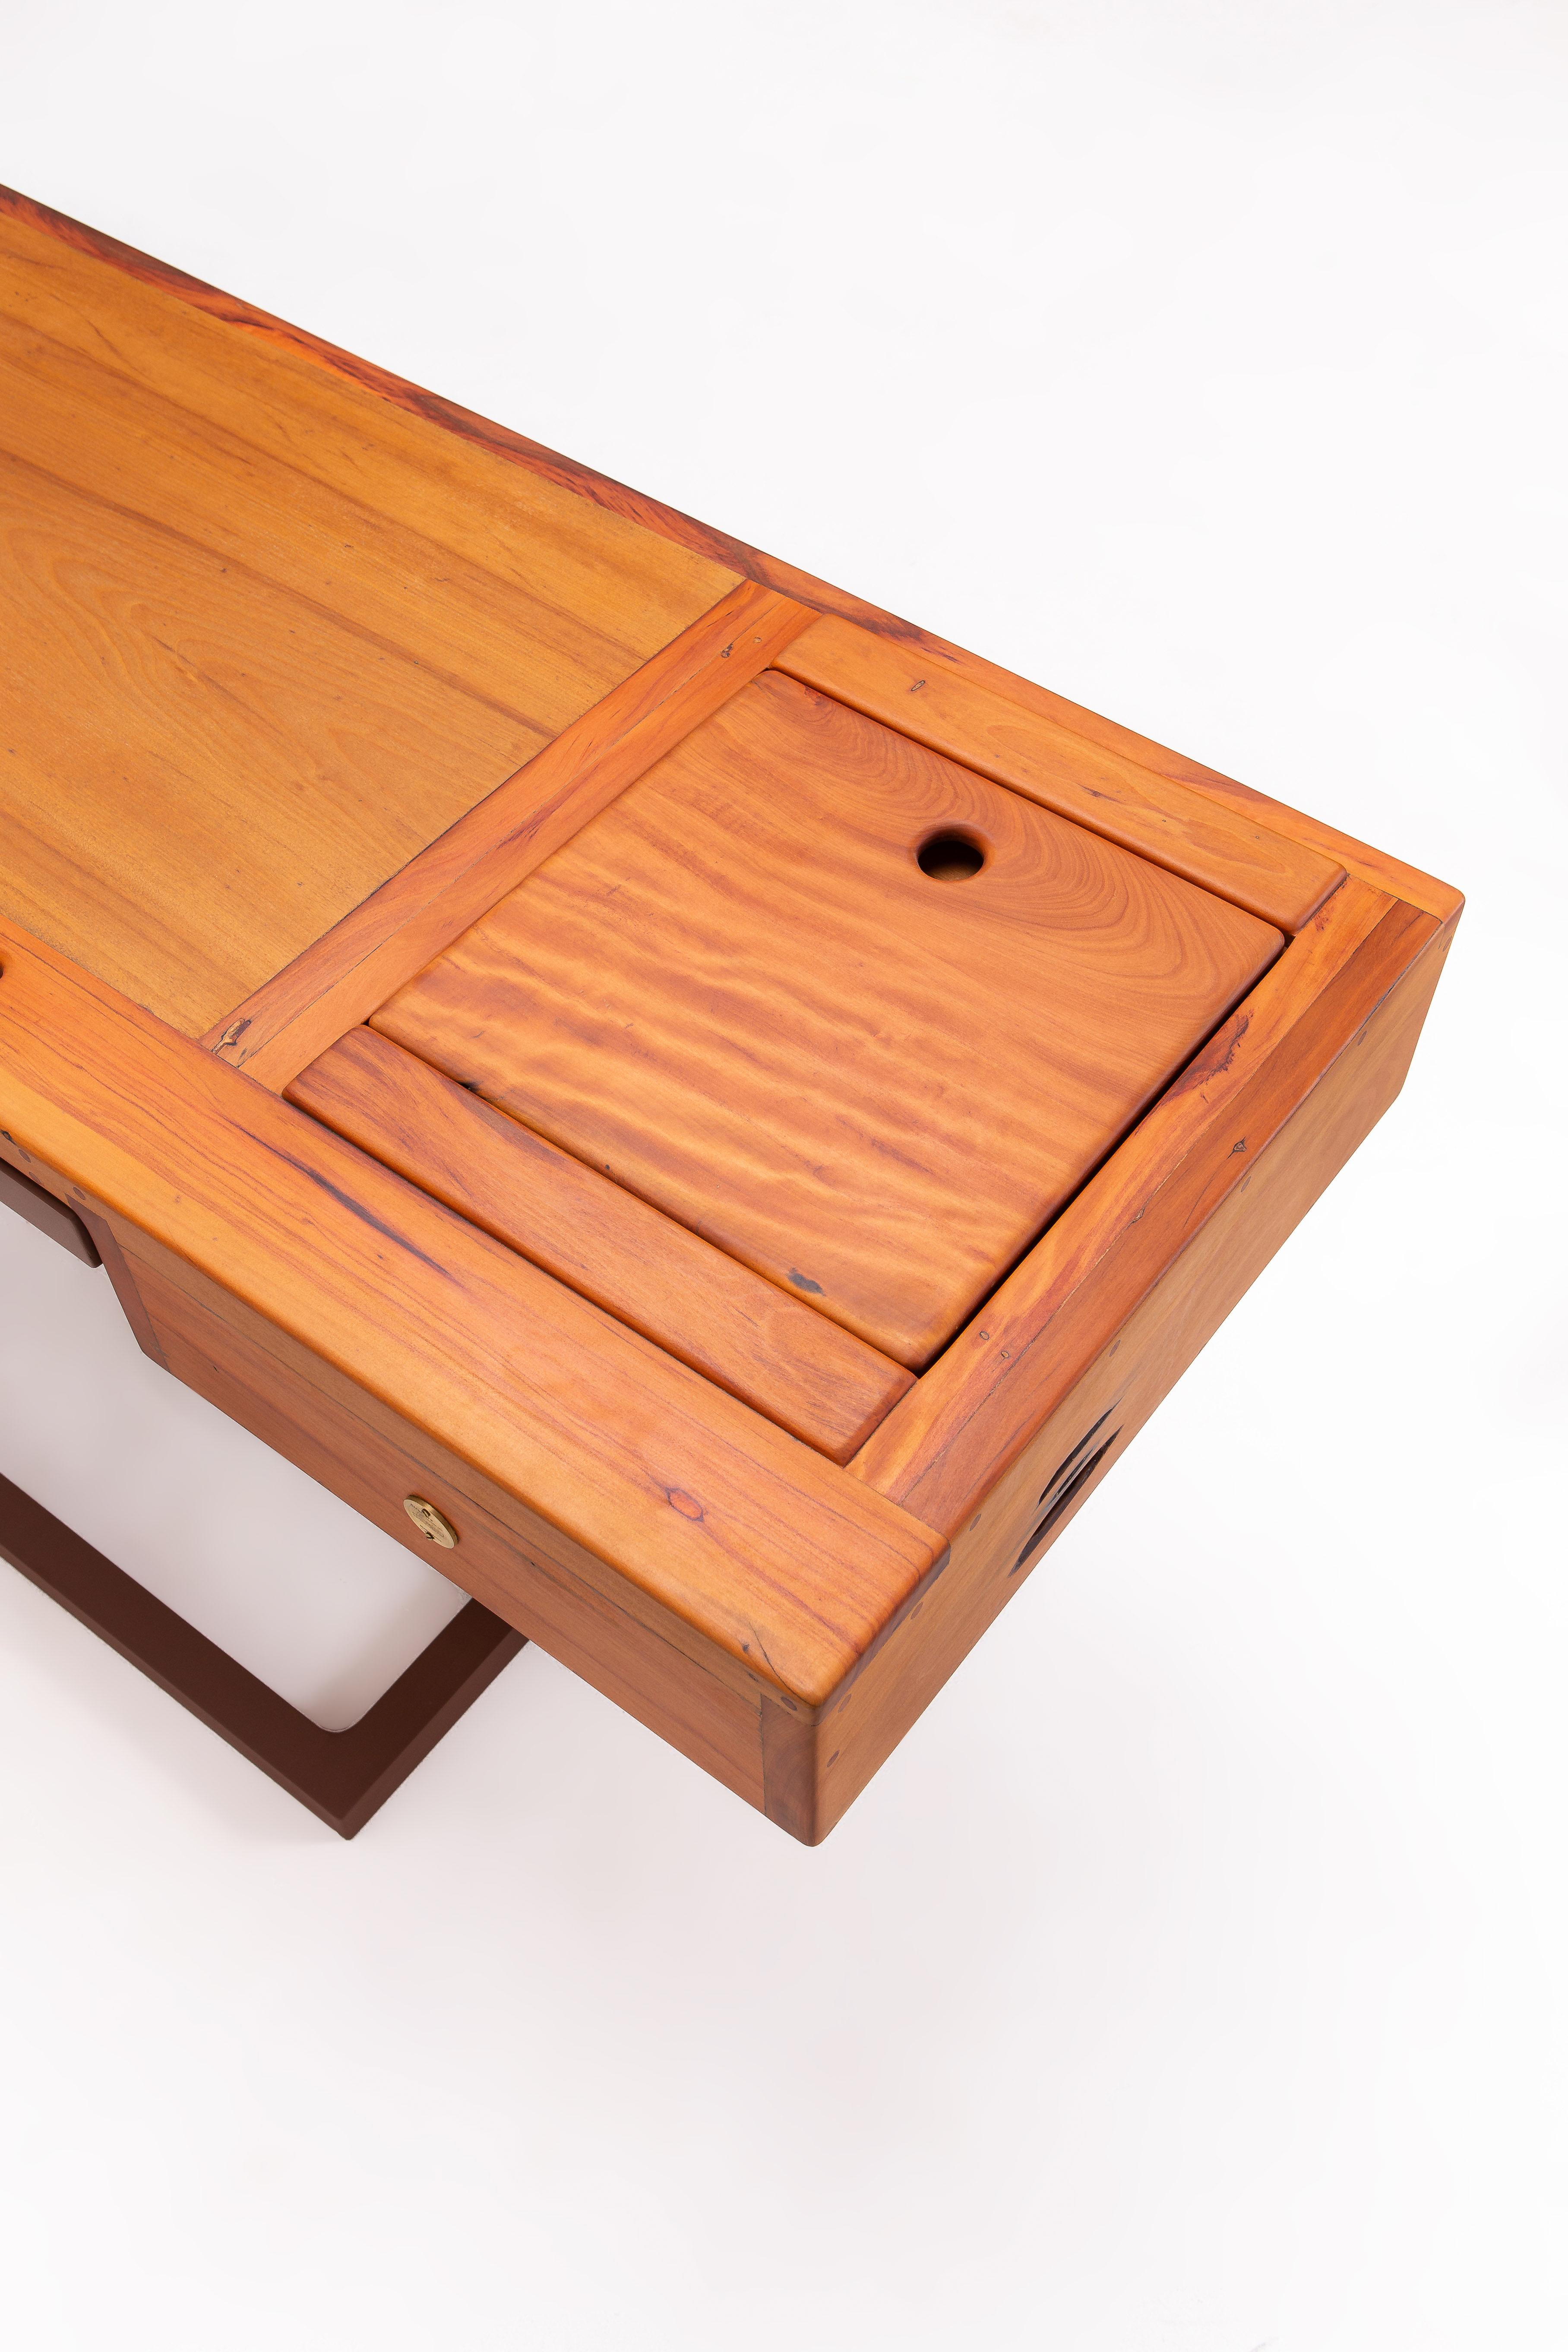 Contemporary Minimalist Brazilian Handcrafted Peroba Desk ''Cantilever'' by Dimitrih Correa For Sale